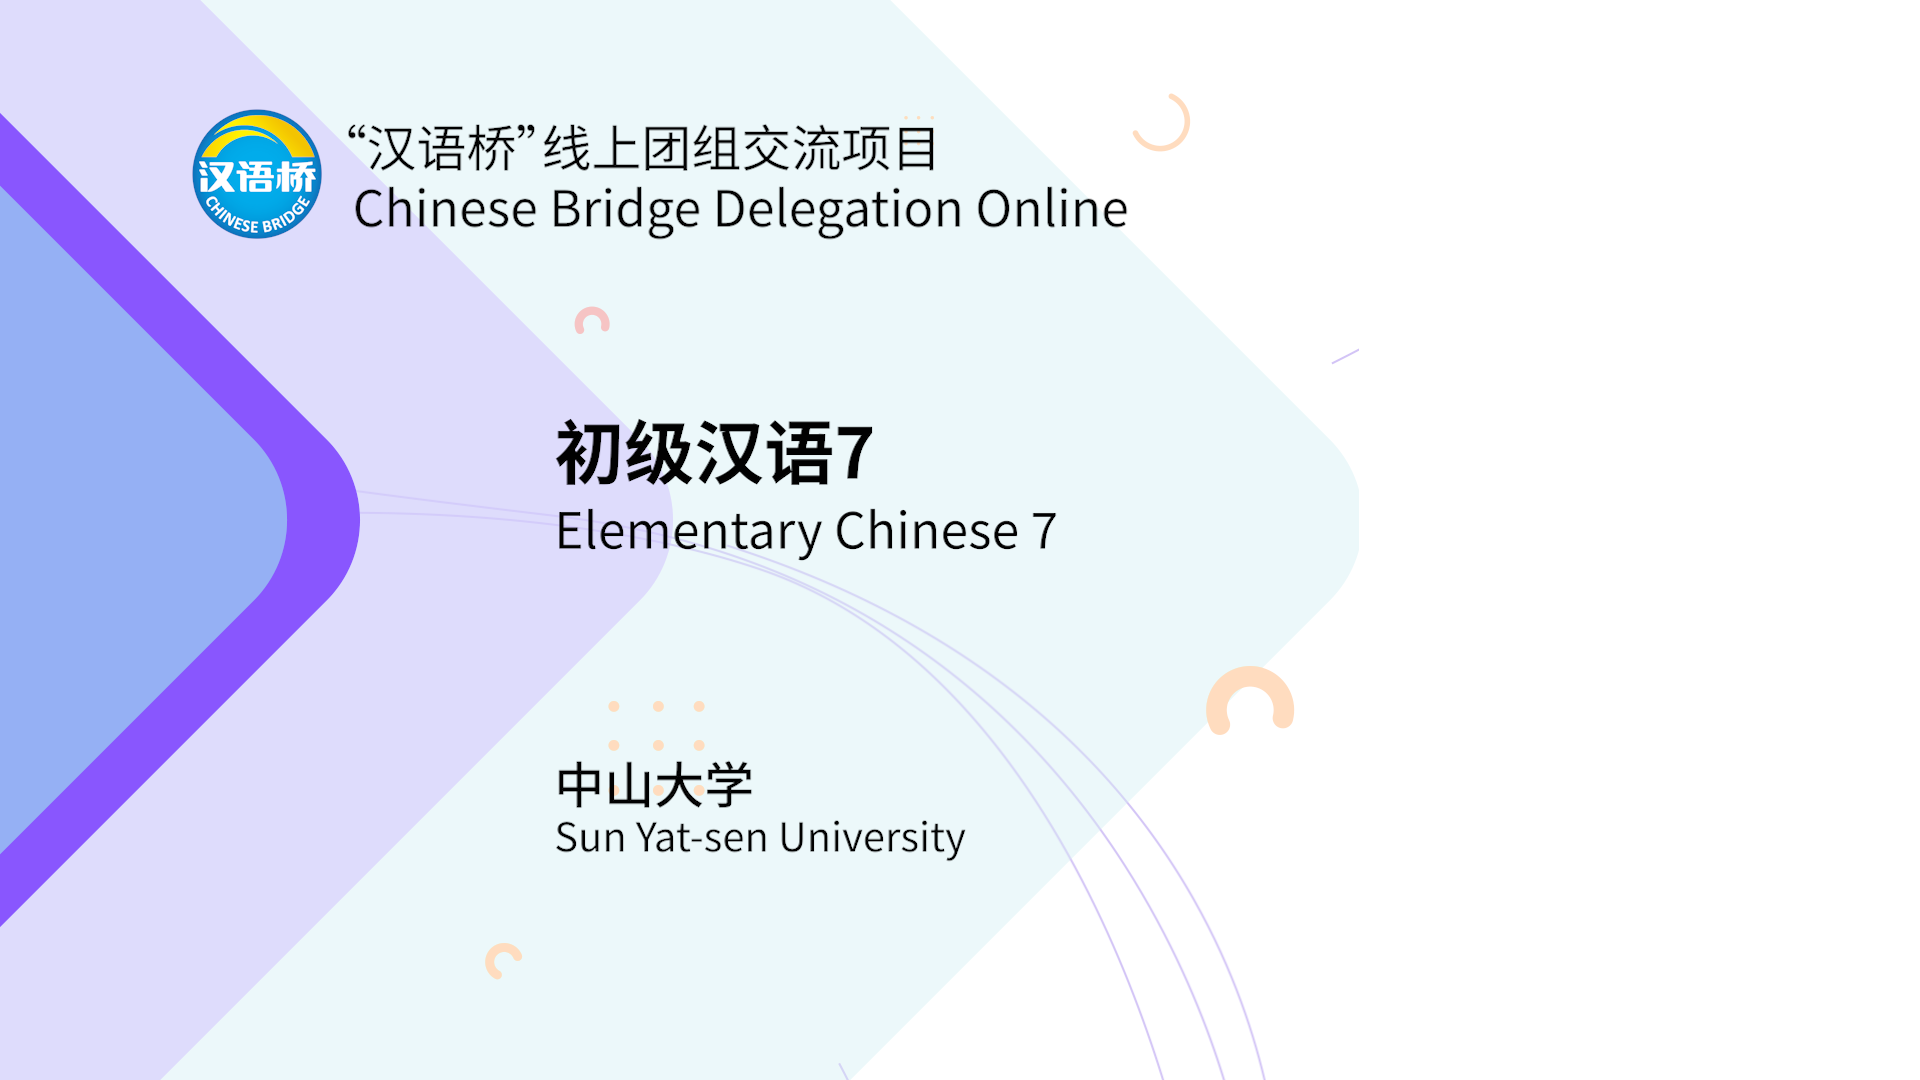 Elementary Chinese 7